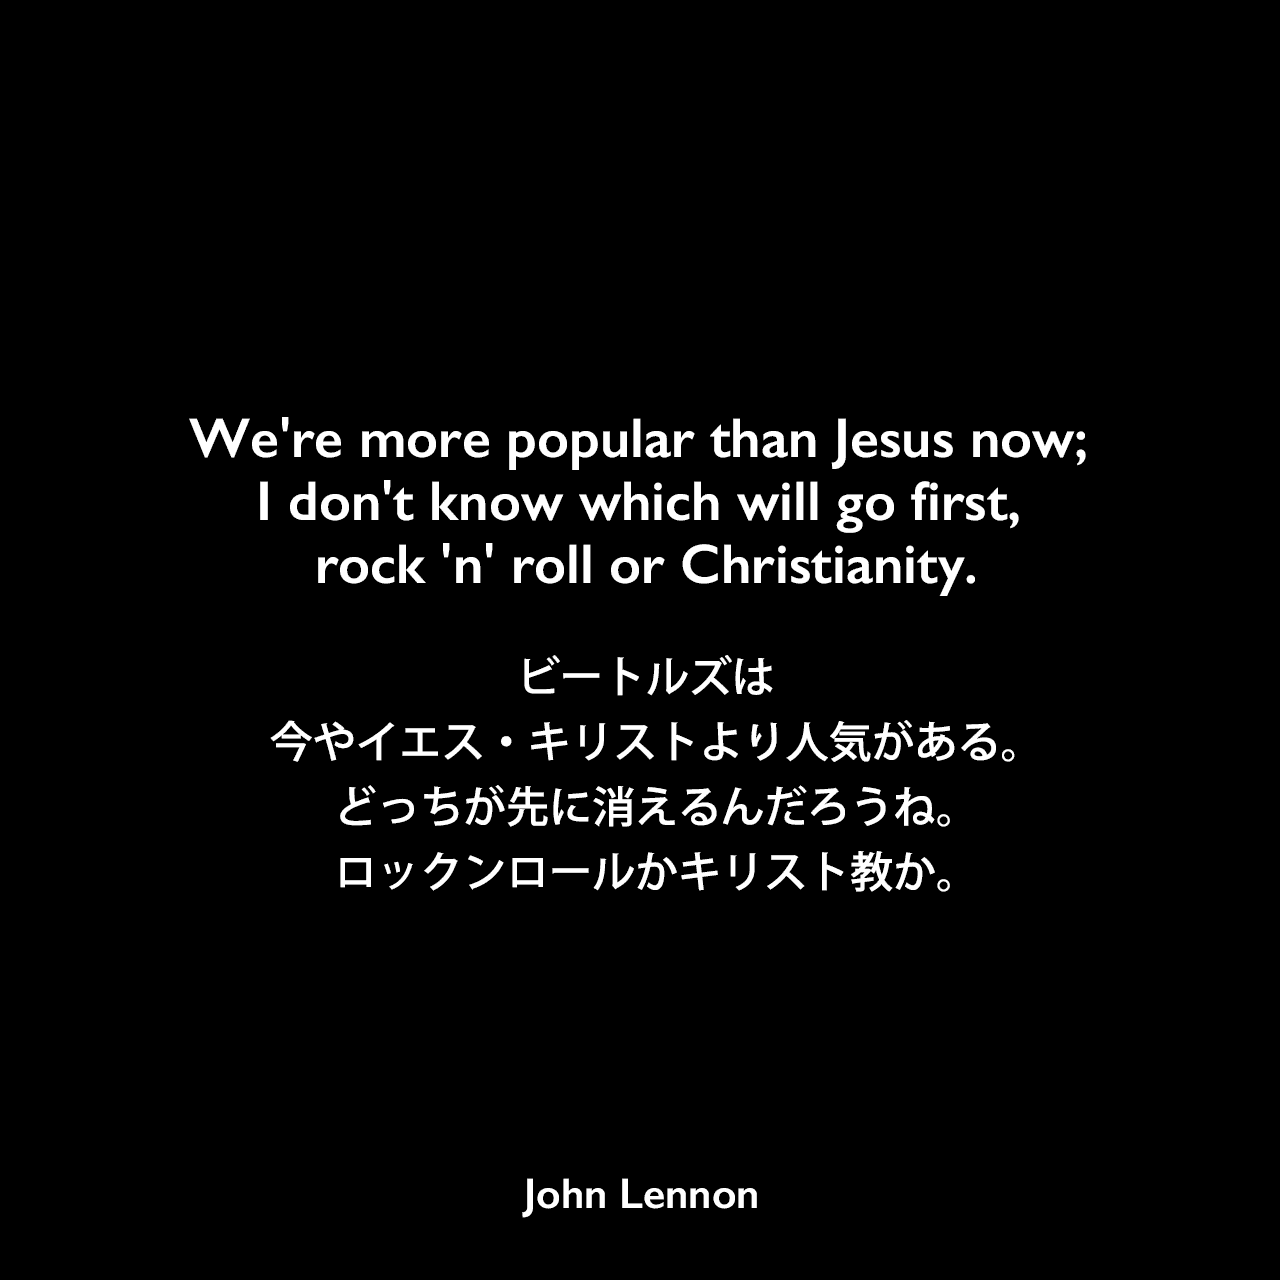 We're more popular than Jesus now; I don't know which will go first, rock 'n' roll or Christianity.ビートルズは今やイエス・キリストより人気がある。どっちが先に消えるんだろうね。ロックンロールかキリスト教か。- 1966年のインタビューの発言John Lennon